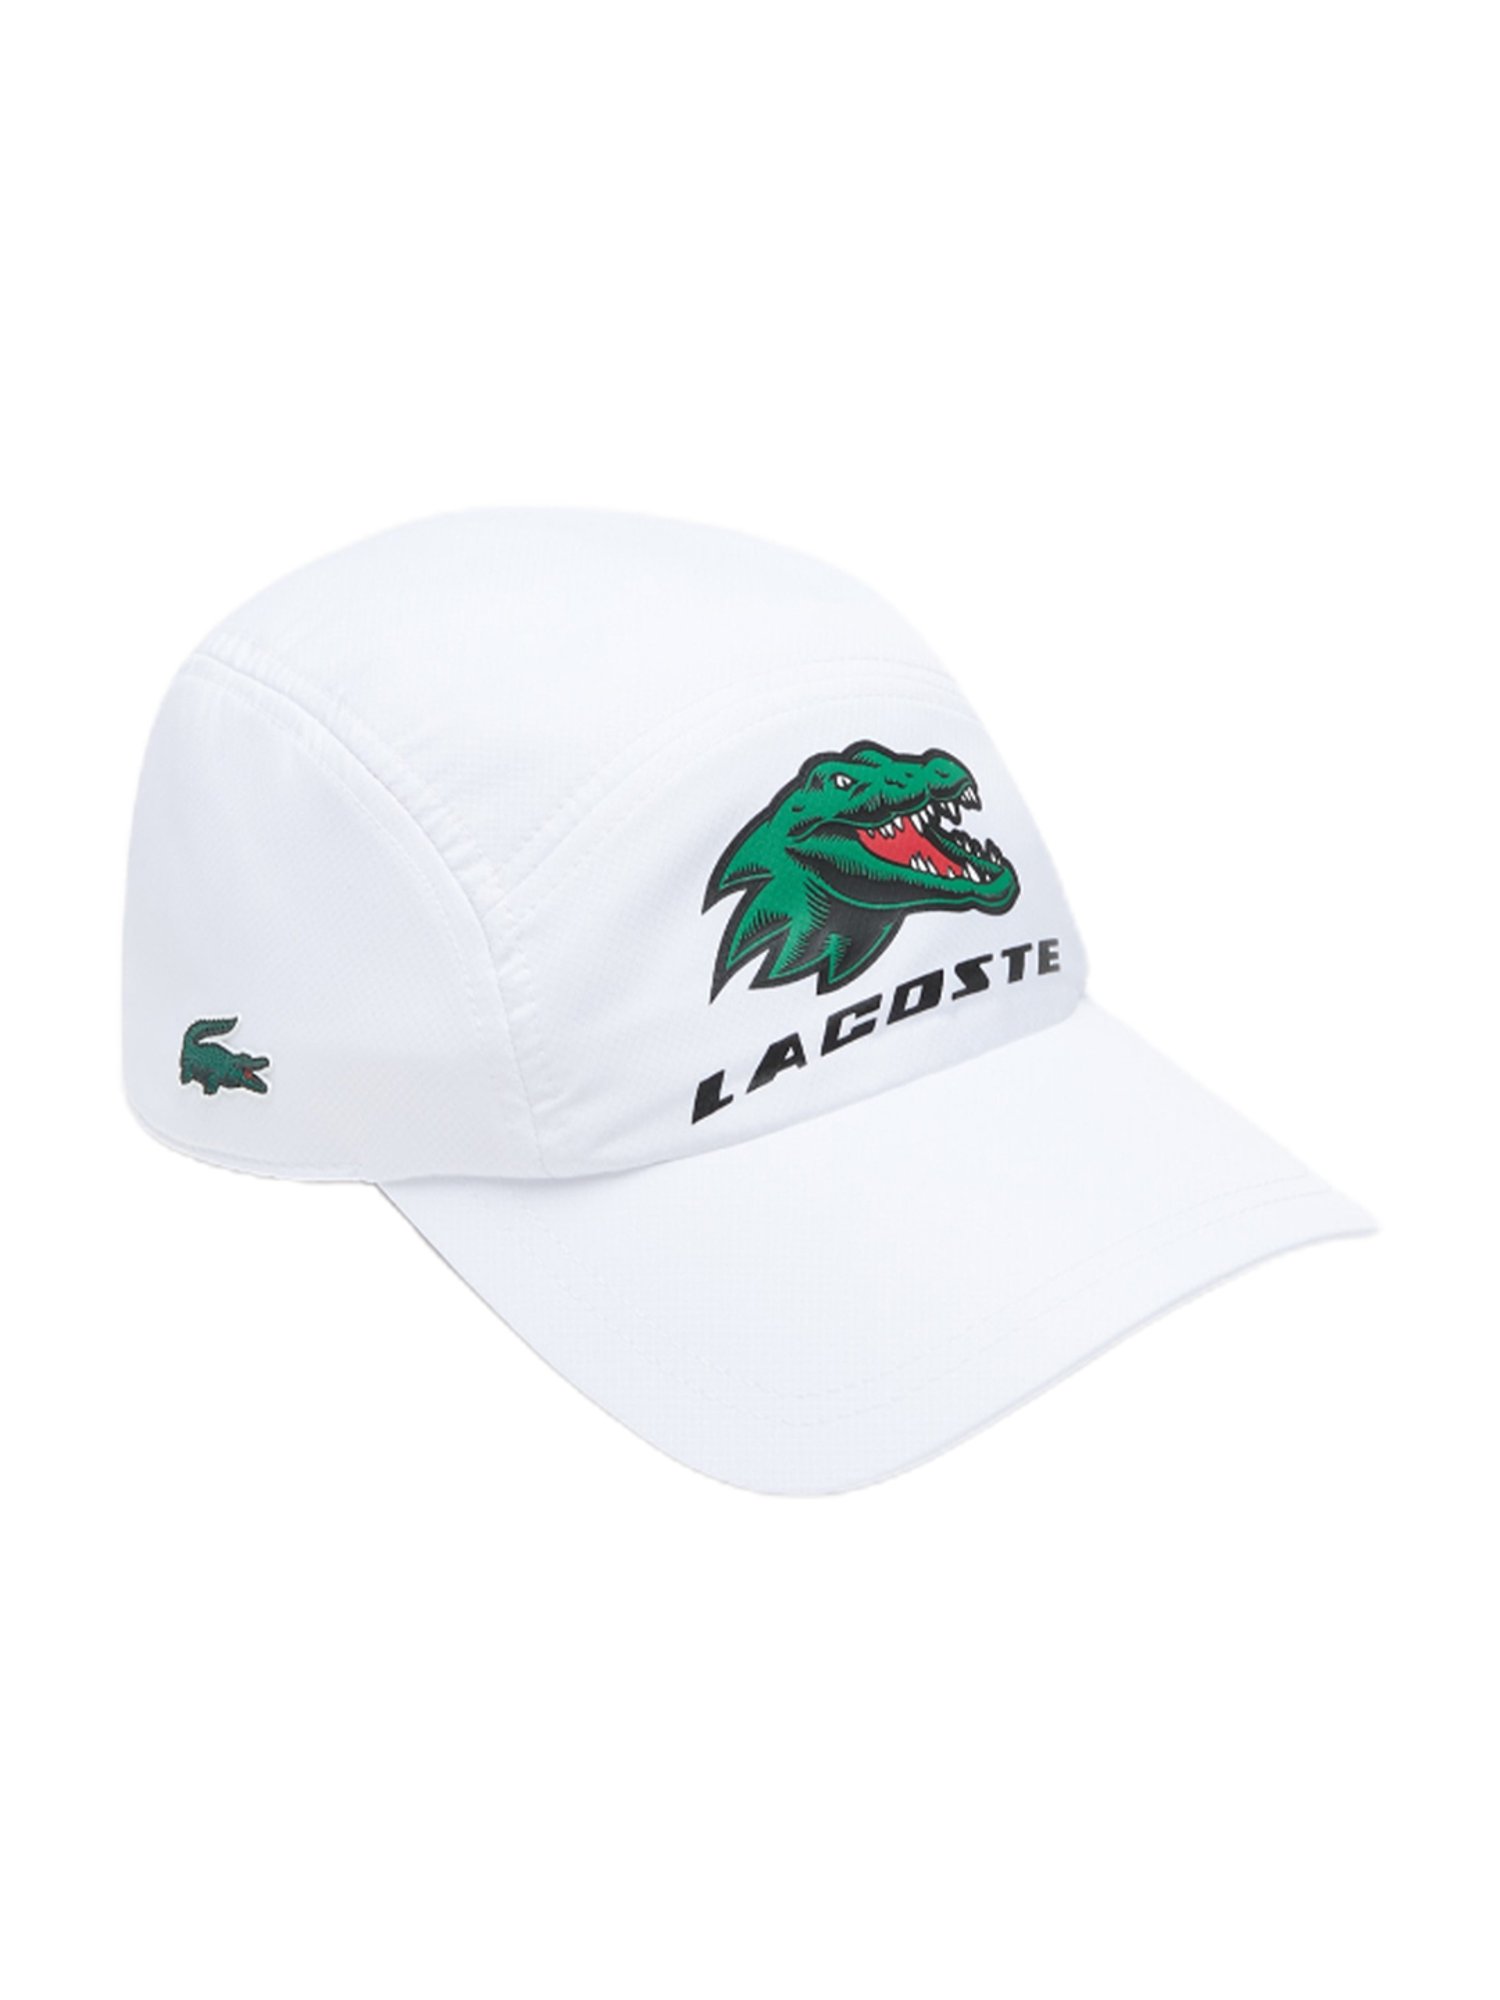 Buy White Sport Crocodile Baseball Cap at Best Price @ Tata